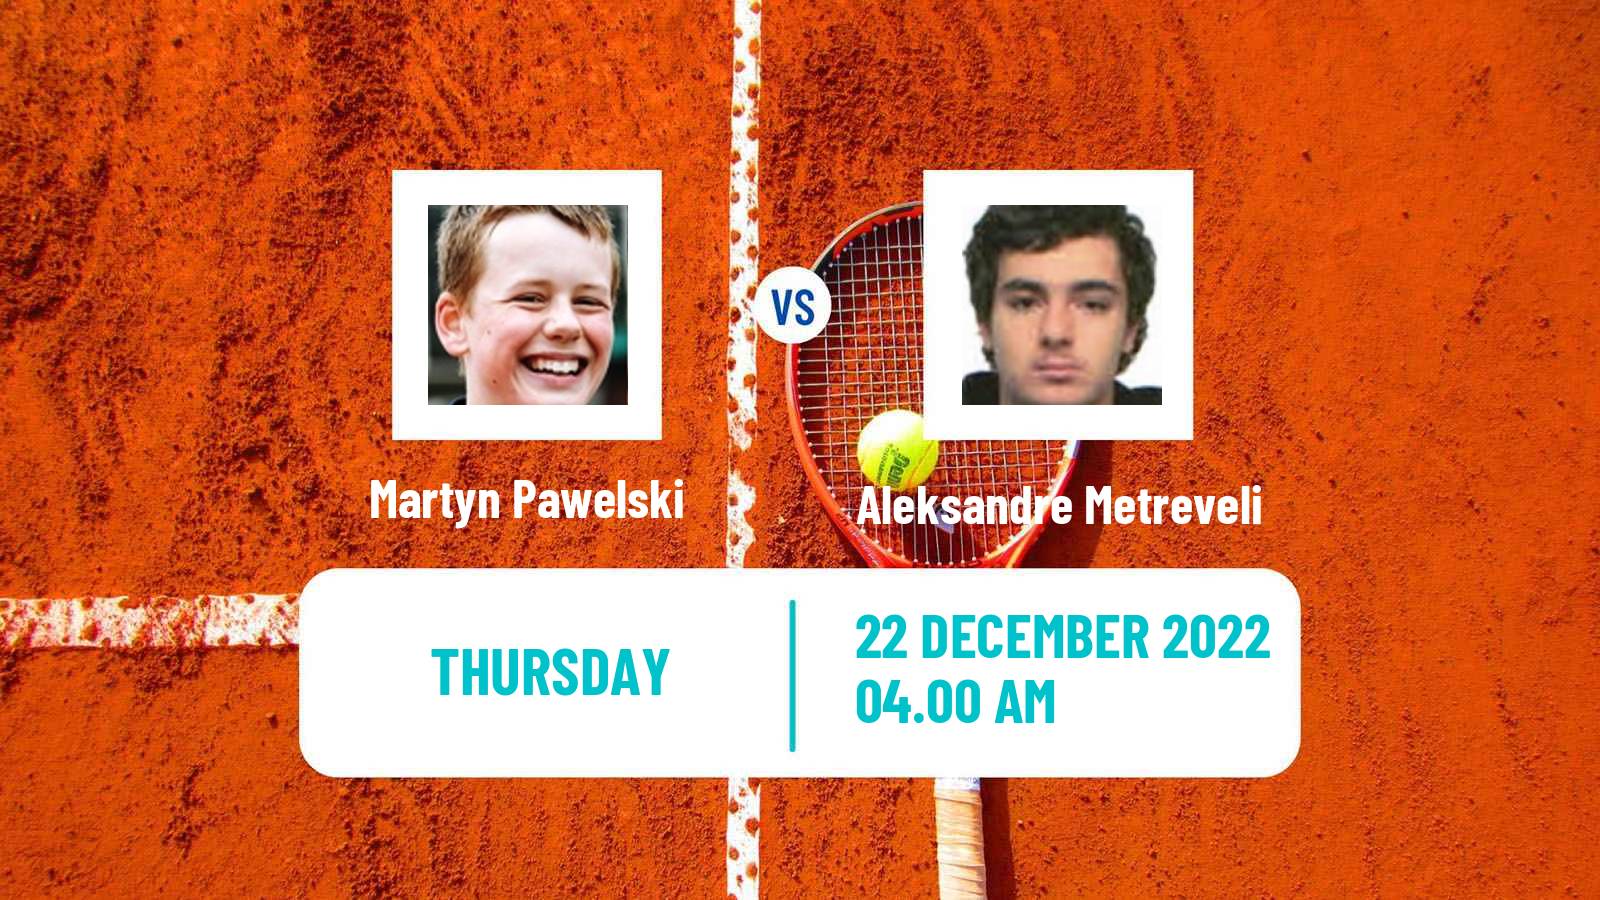 Tennis ITF Tournaments Martyn Pawelski - Aleksandre Metreveli